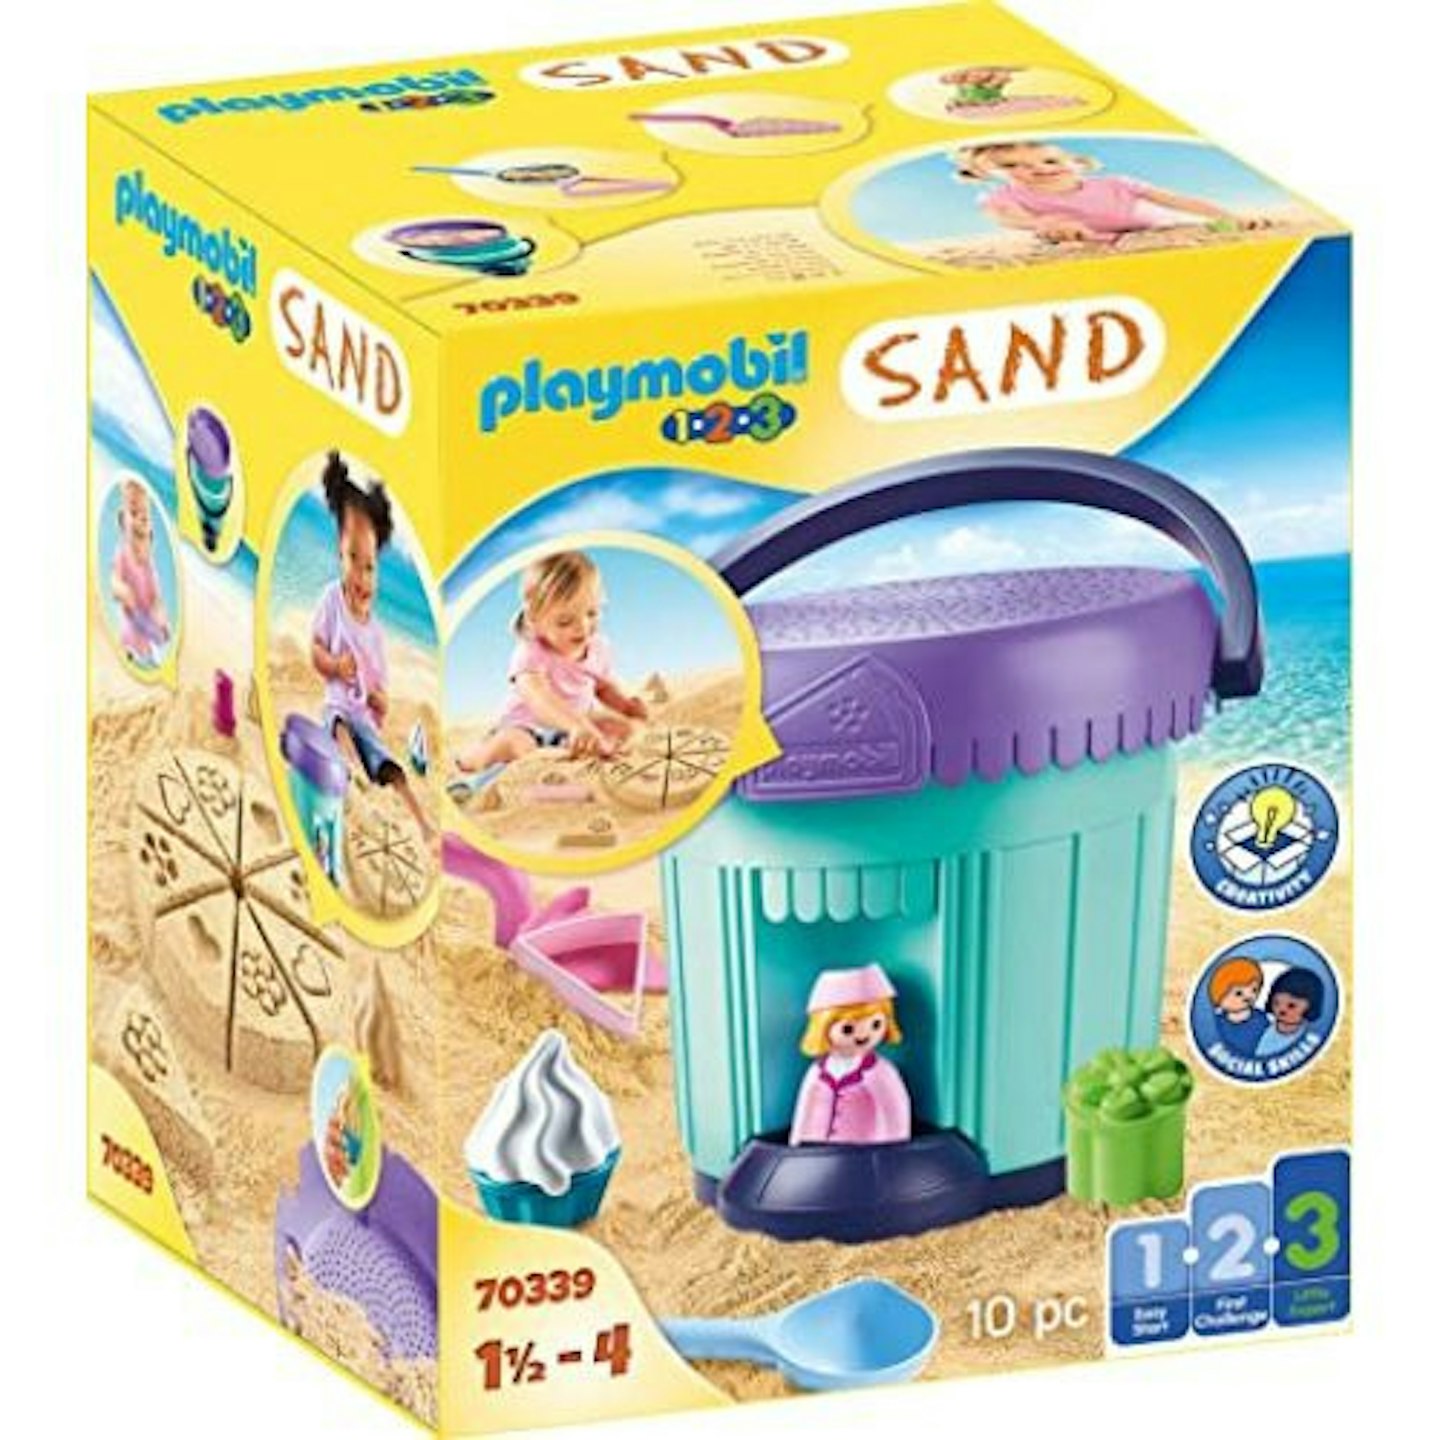 Playmobil SAND Bakery Sand Bucket